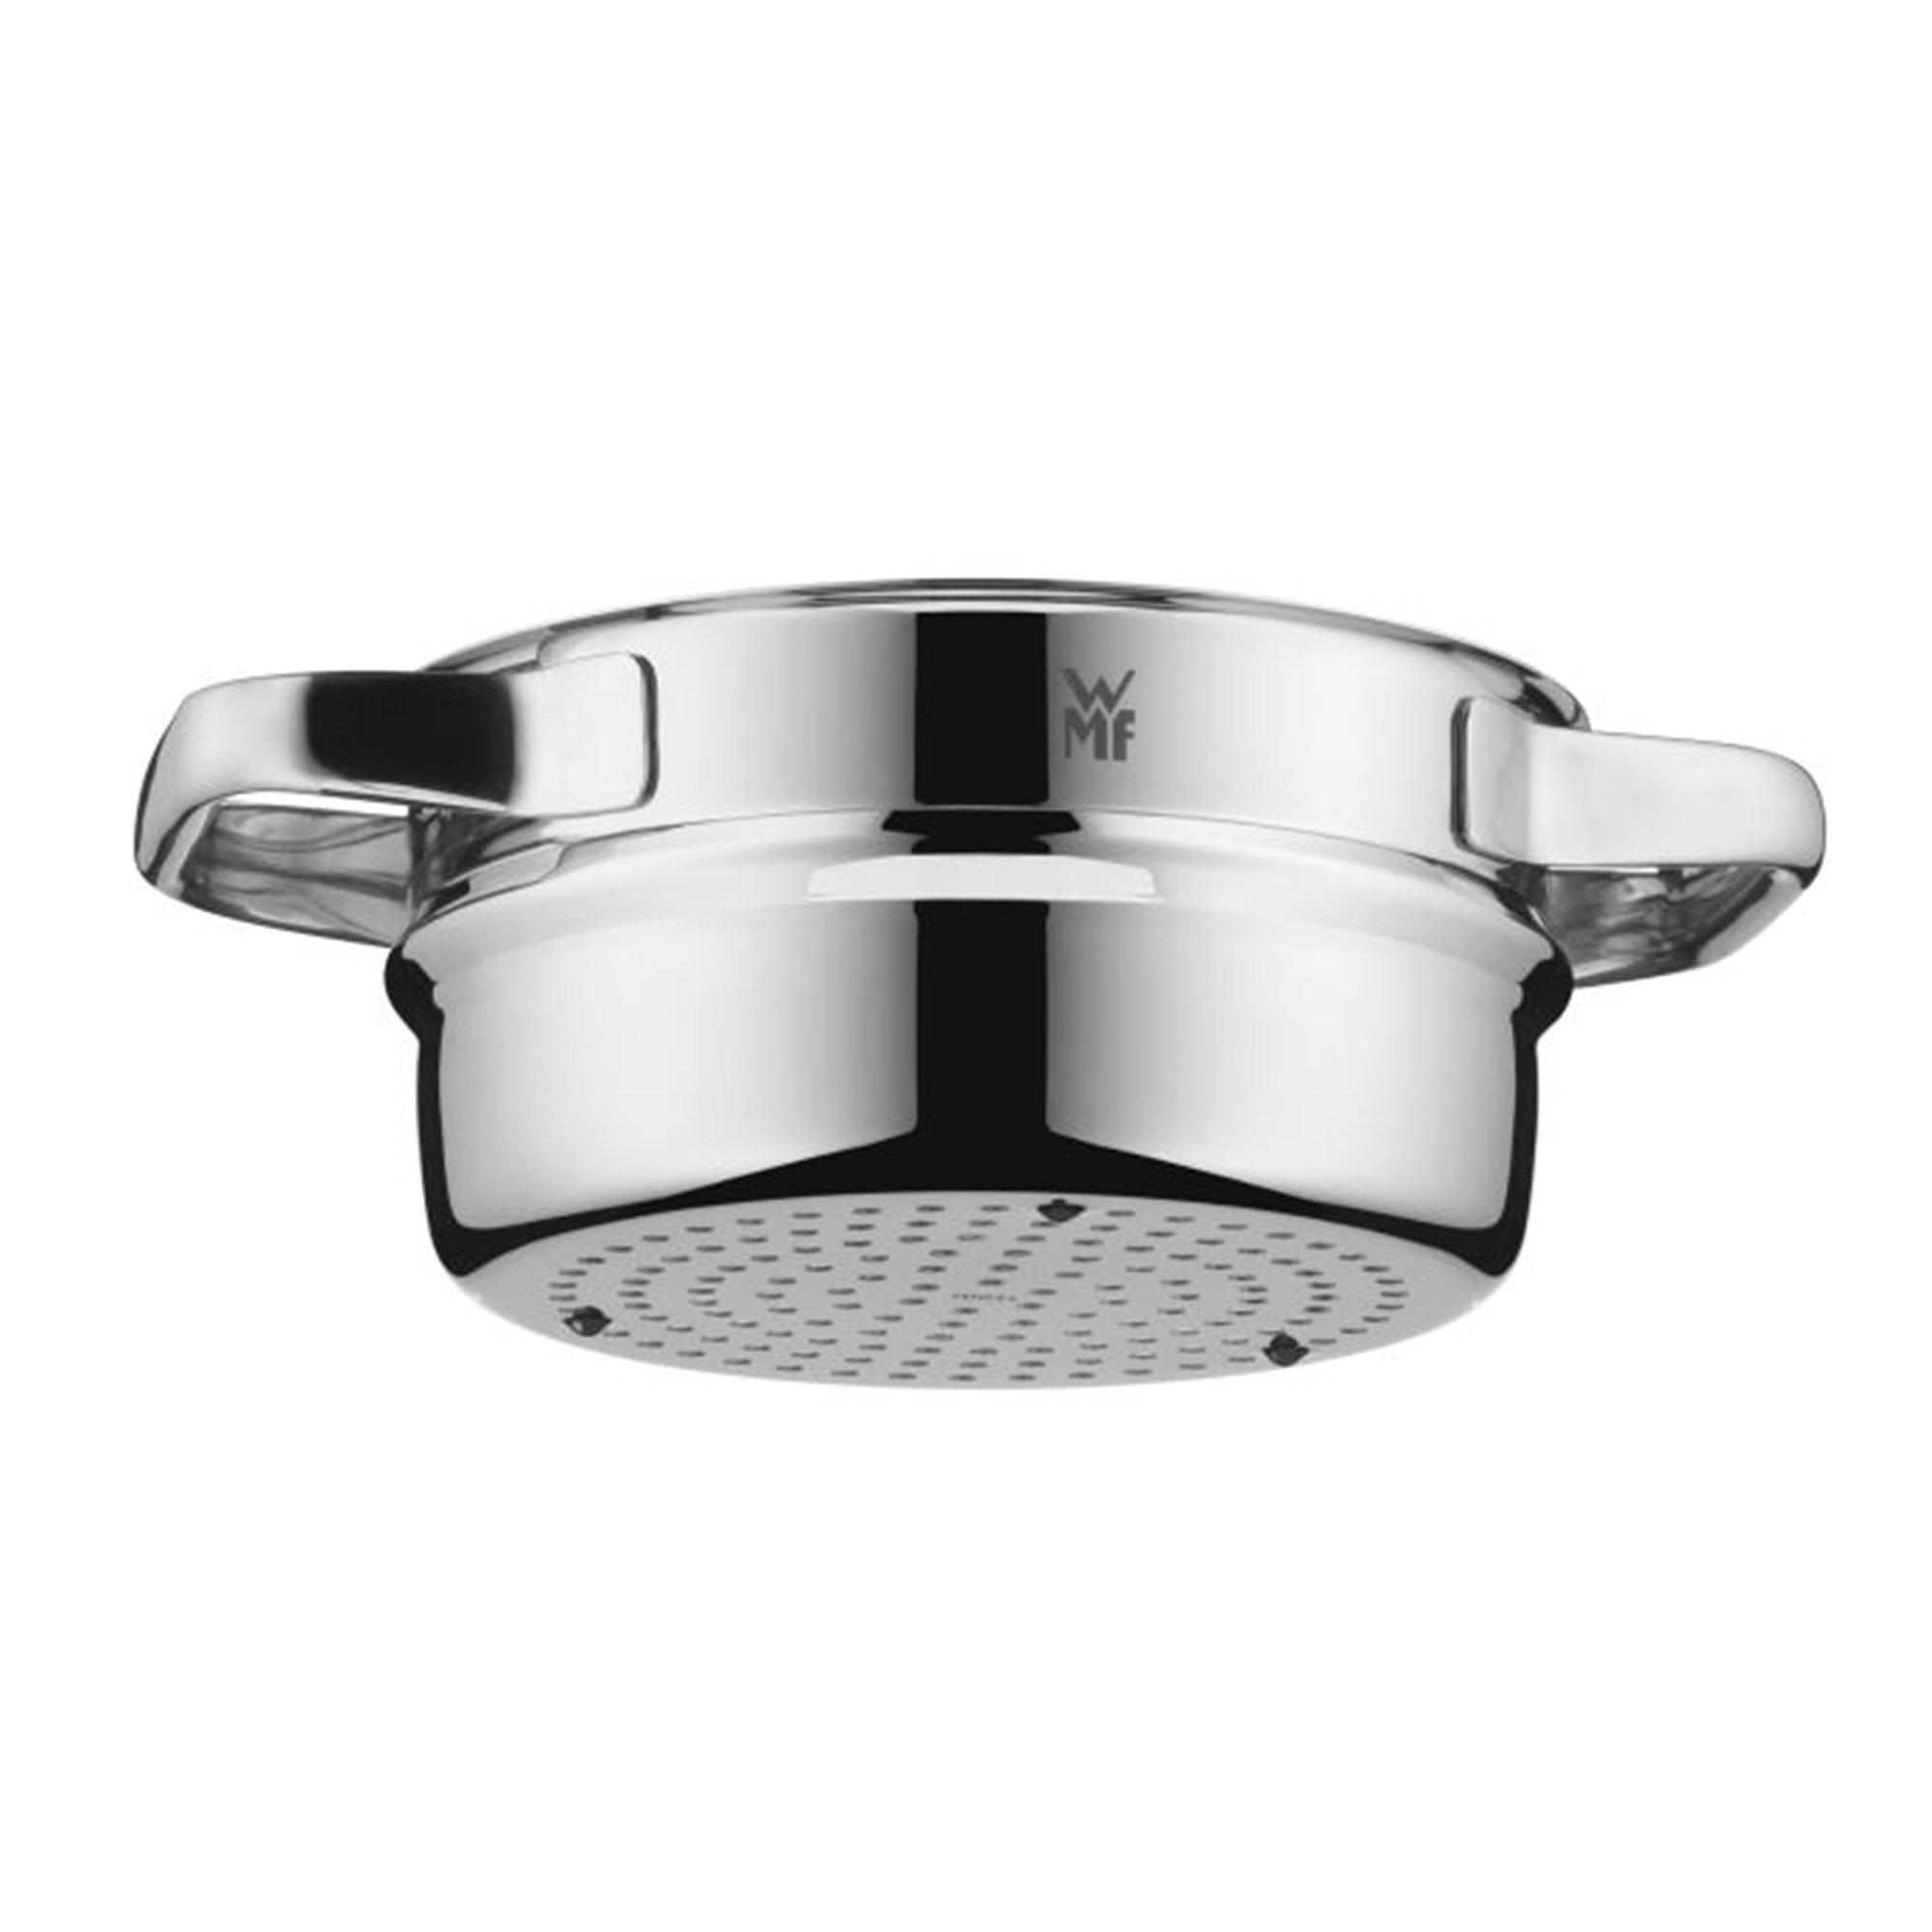 Lodge Skillet lid for frying pans L10SC3, diameter approx. 30.5 cm